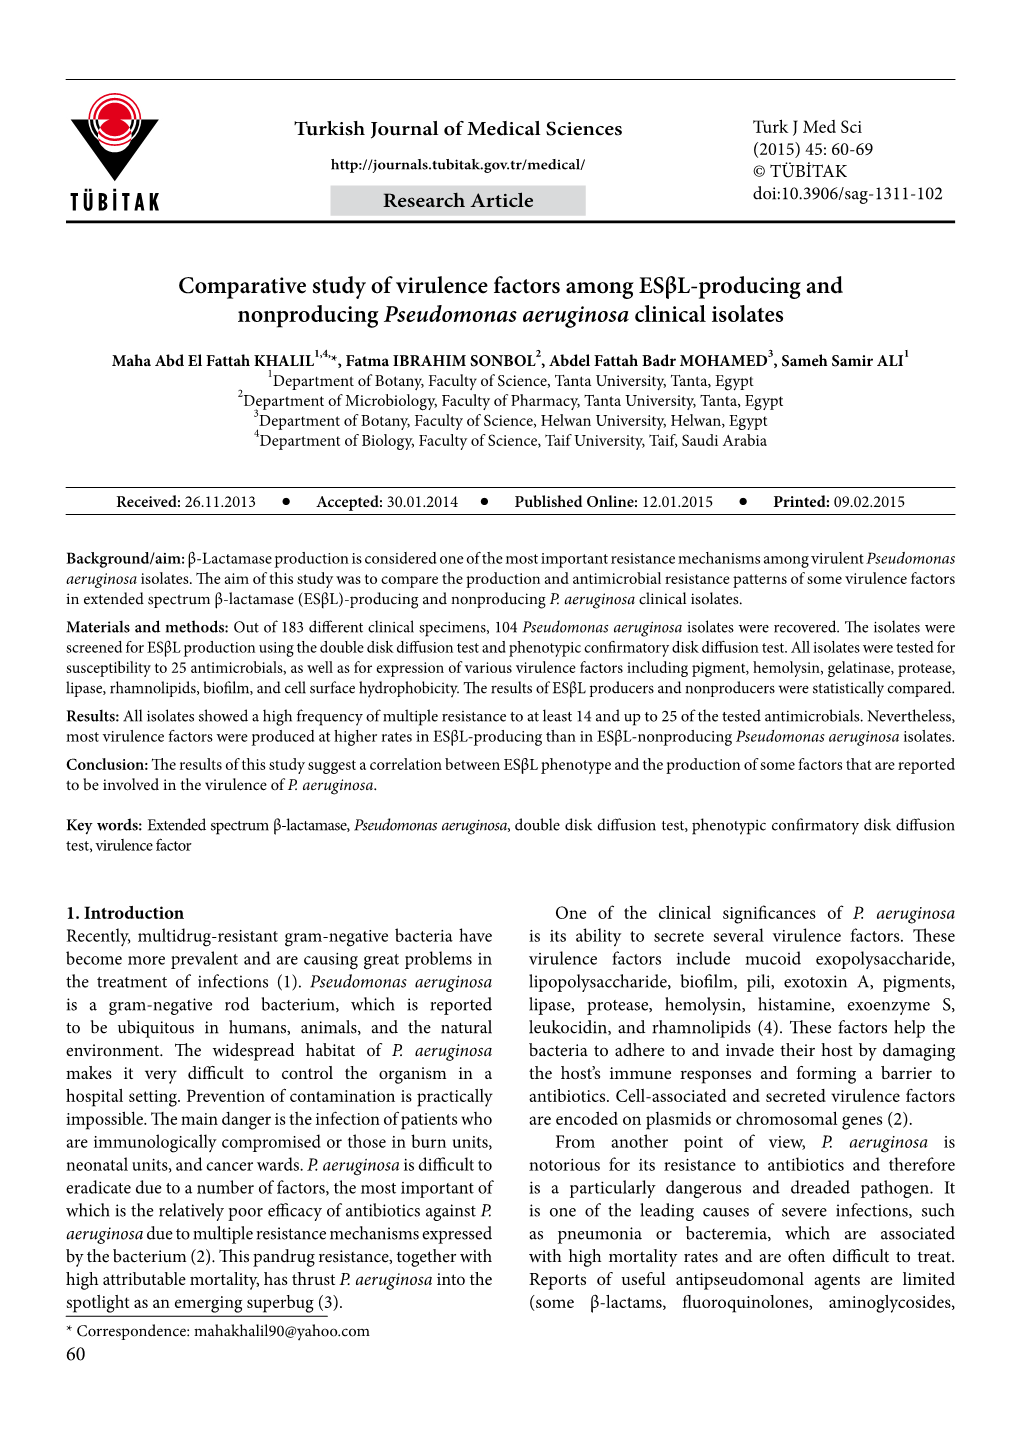 Comparative Study of Virulence Factors Among Esβl-Producing and Nonproducing Pseudomonas Aeruginosa Clinical Isolates